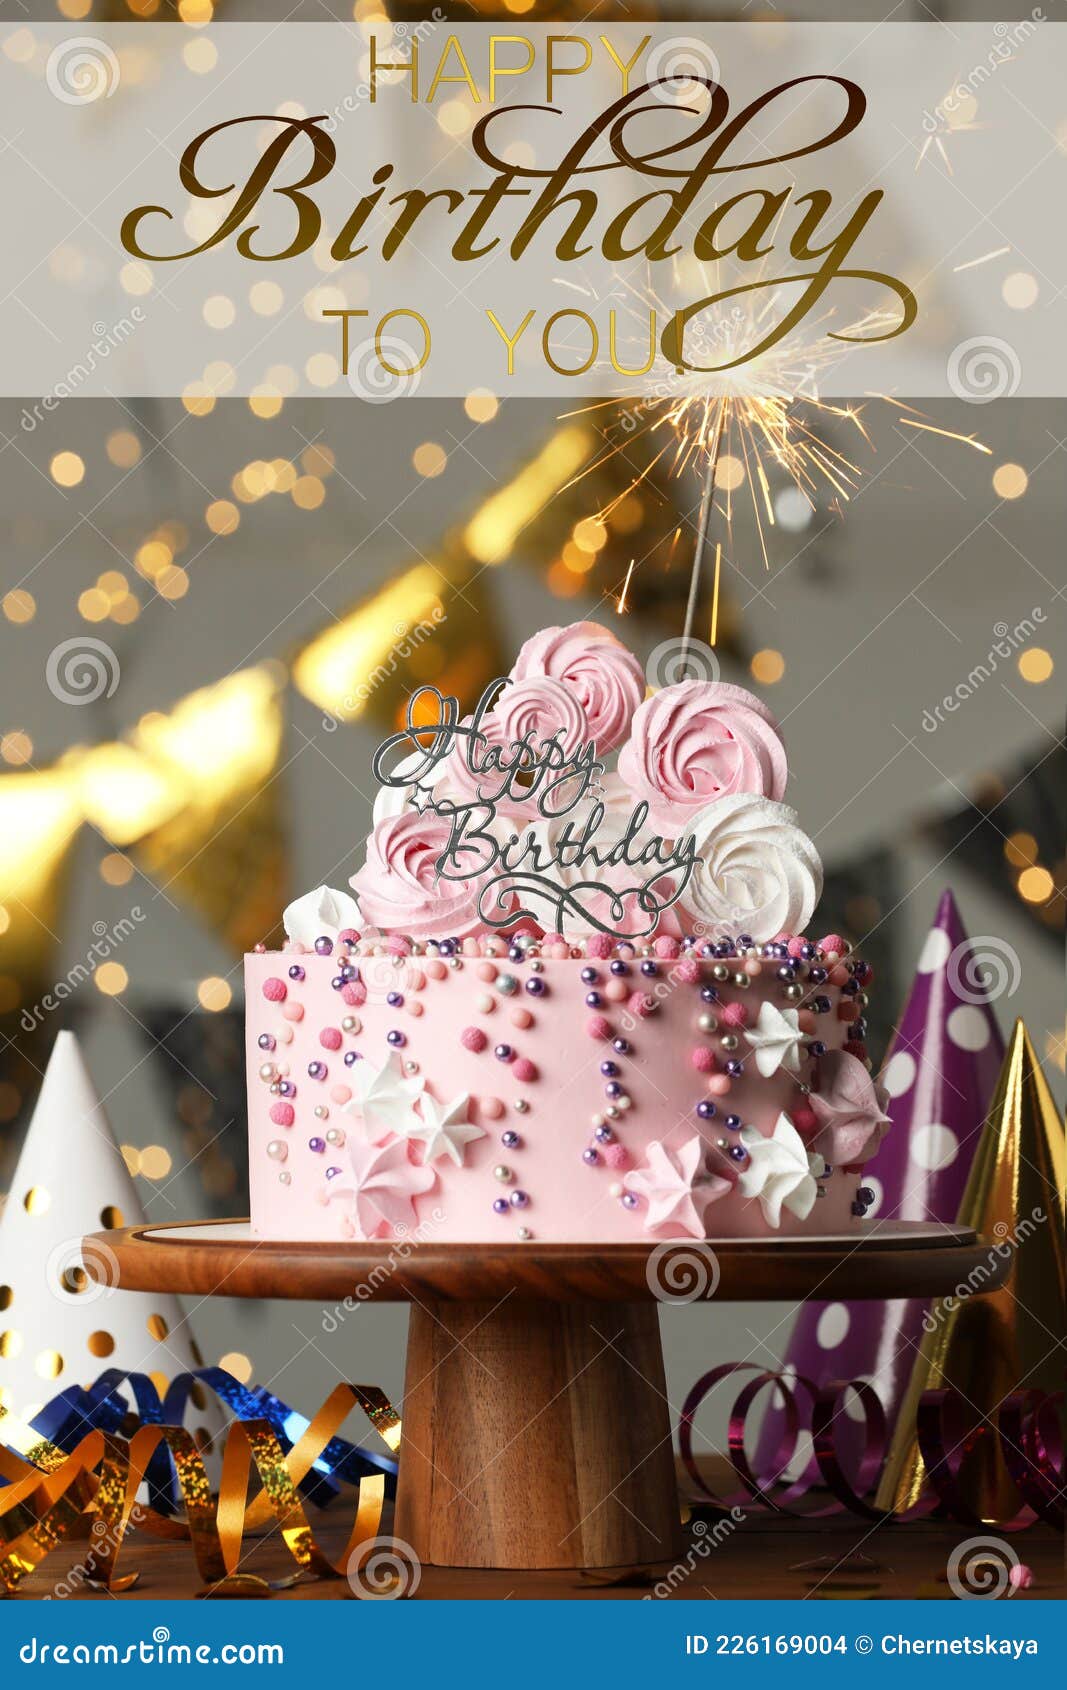 8,322 Birthday Cake Glitter Royalty-Free Images, Stock Photos